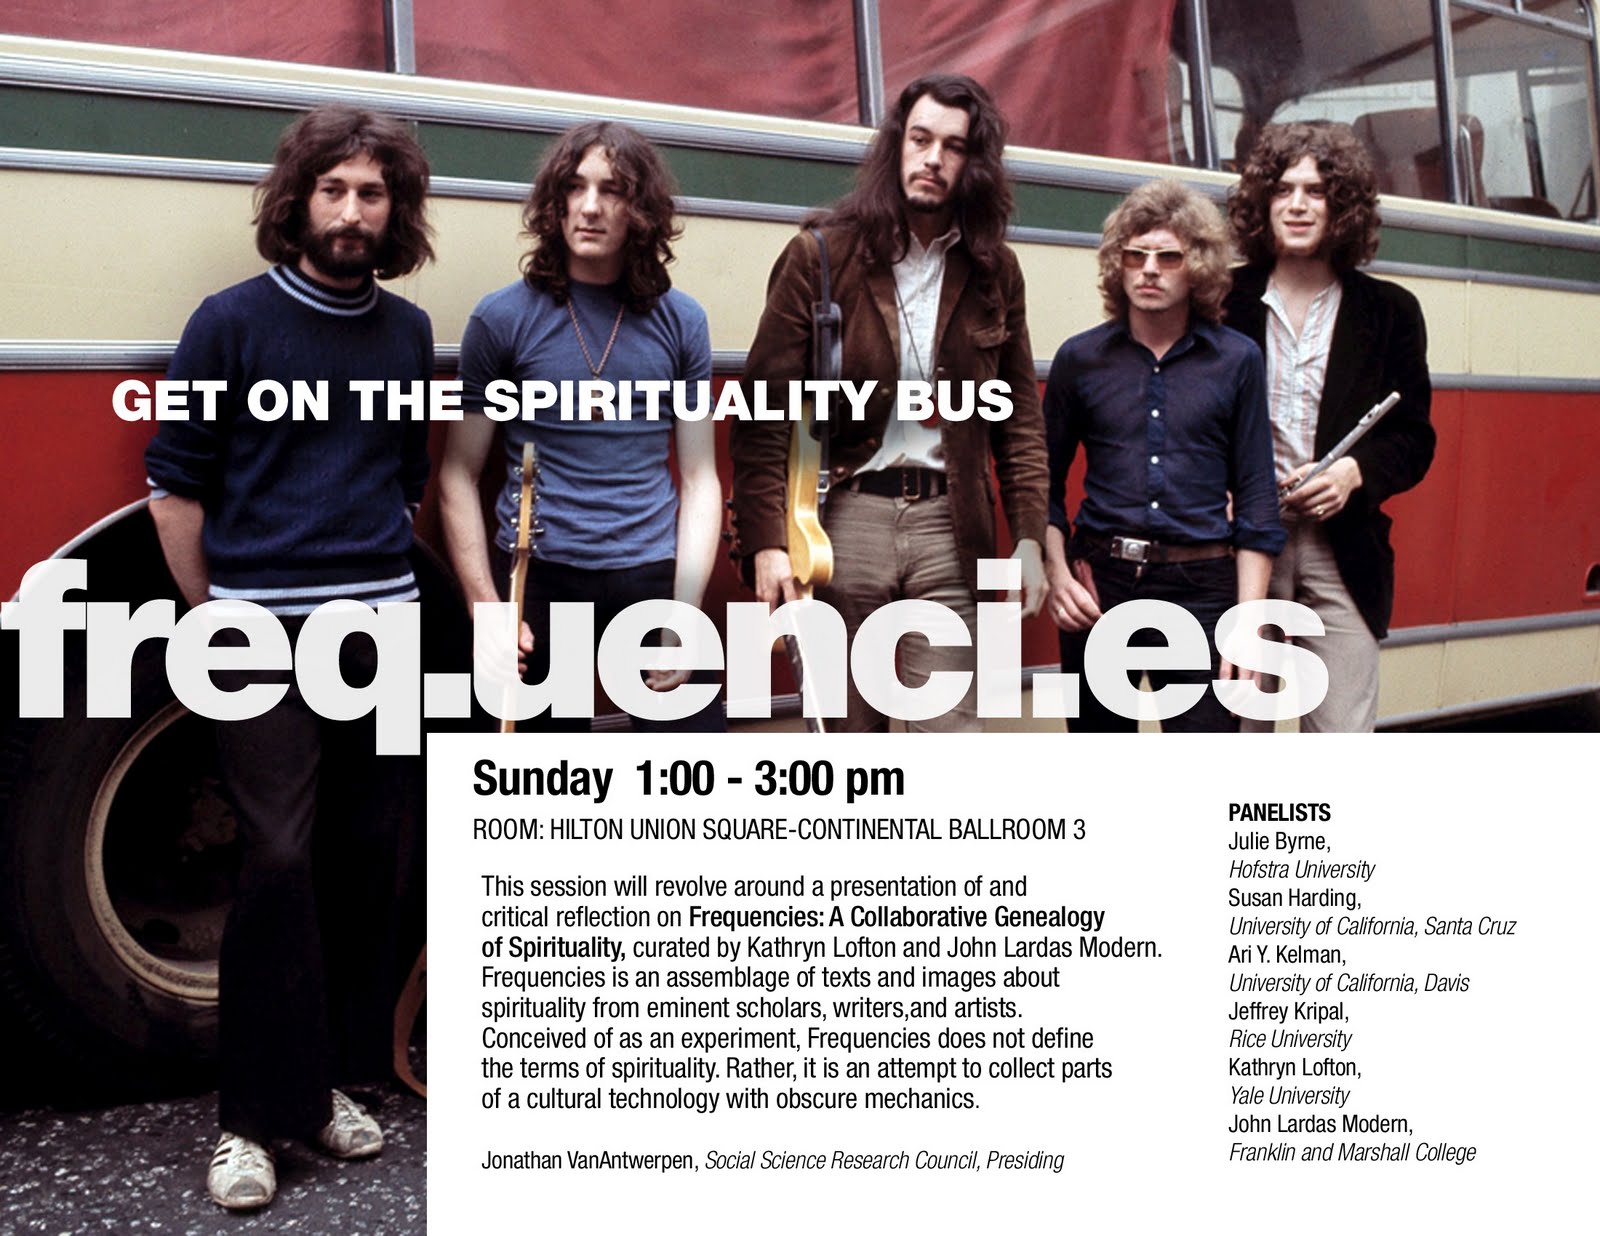 Get on the Spirituality Bus